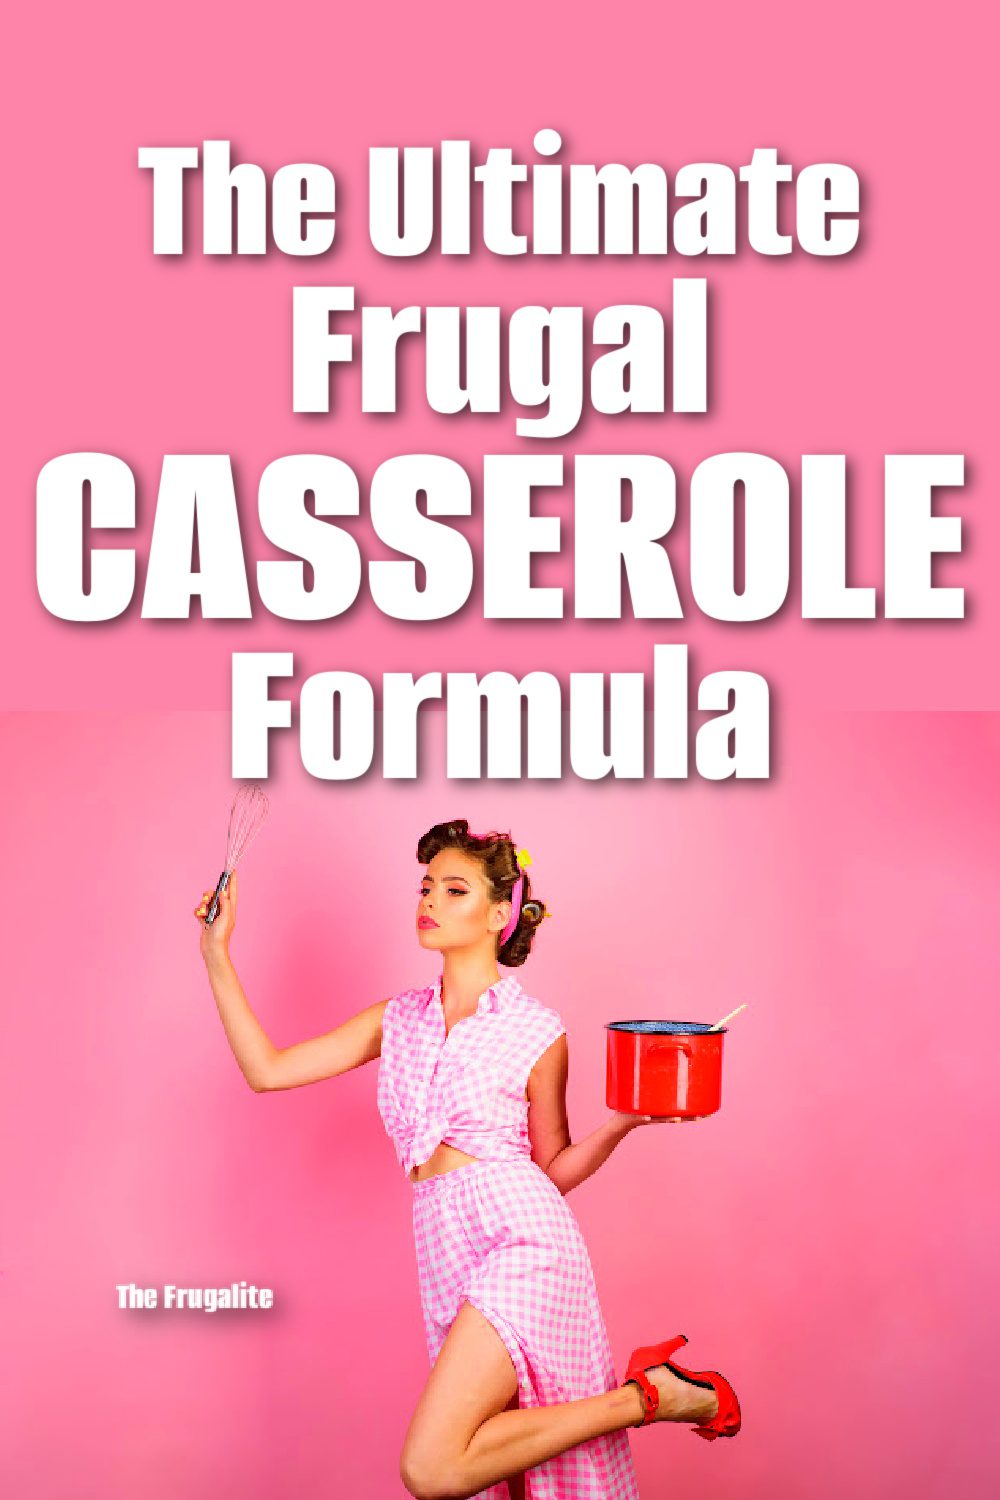 The Ultimate Frugal Casserole Formula